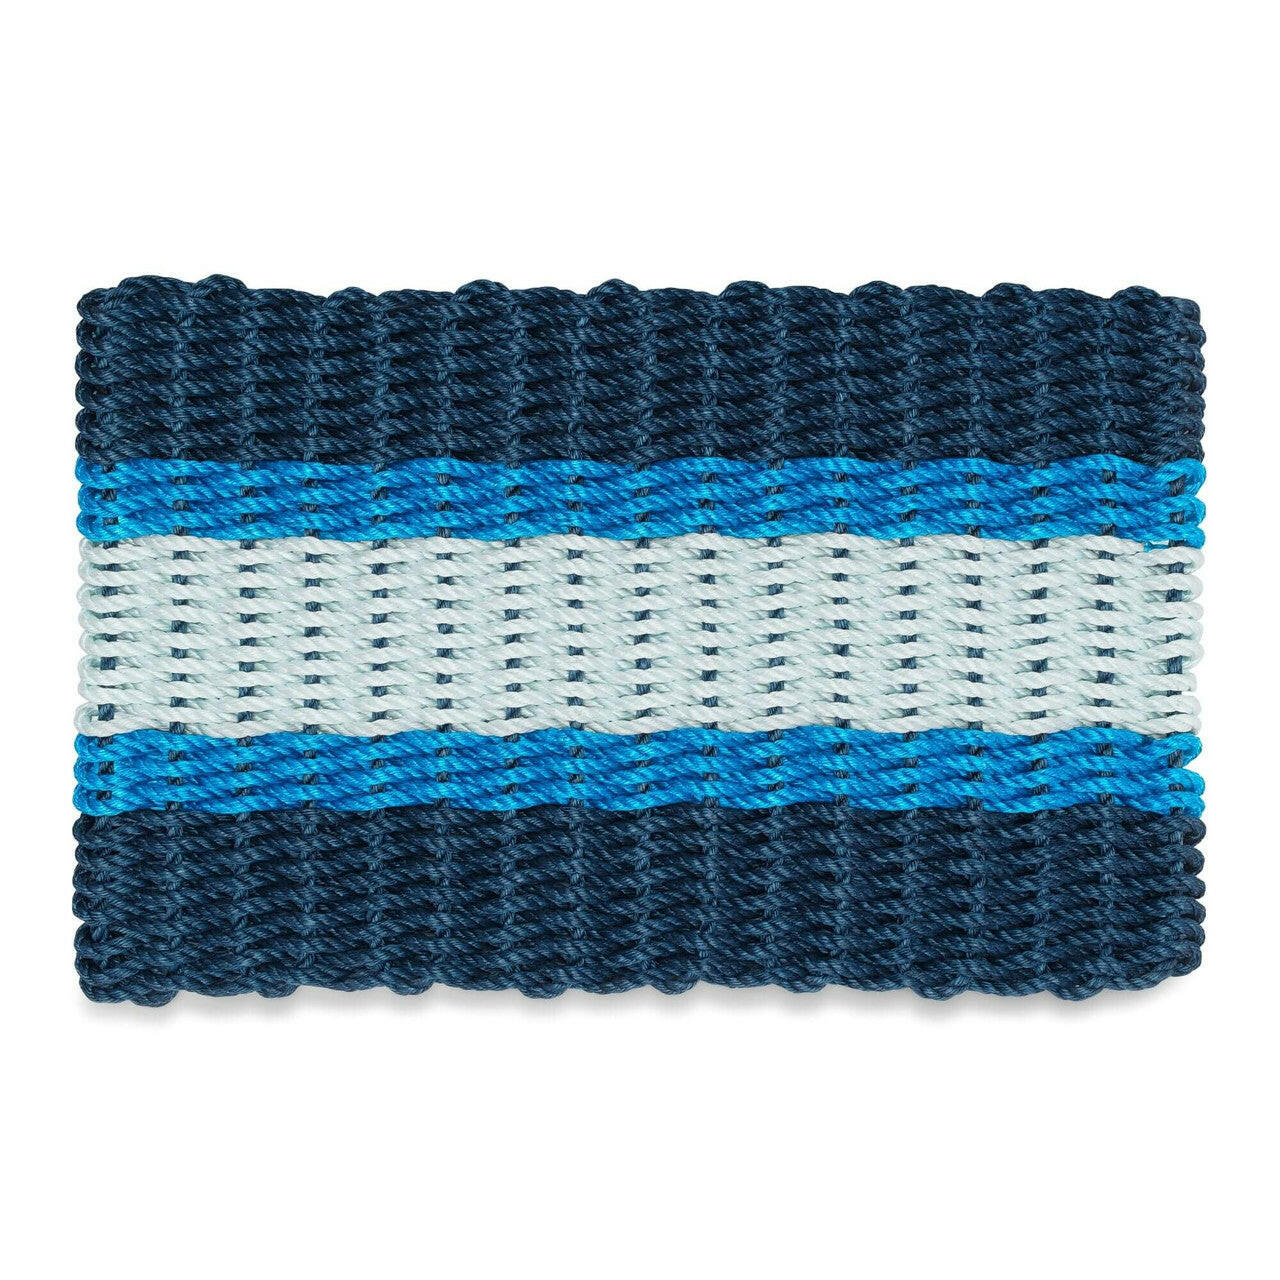 Image of Wicked Good Nautical Rope Doormat, Navy, Light Blue, Seafoam